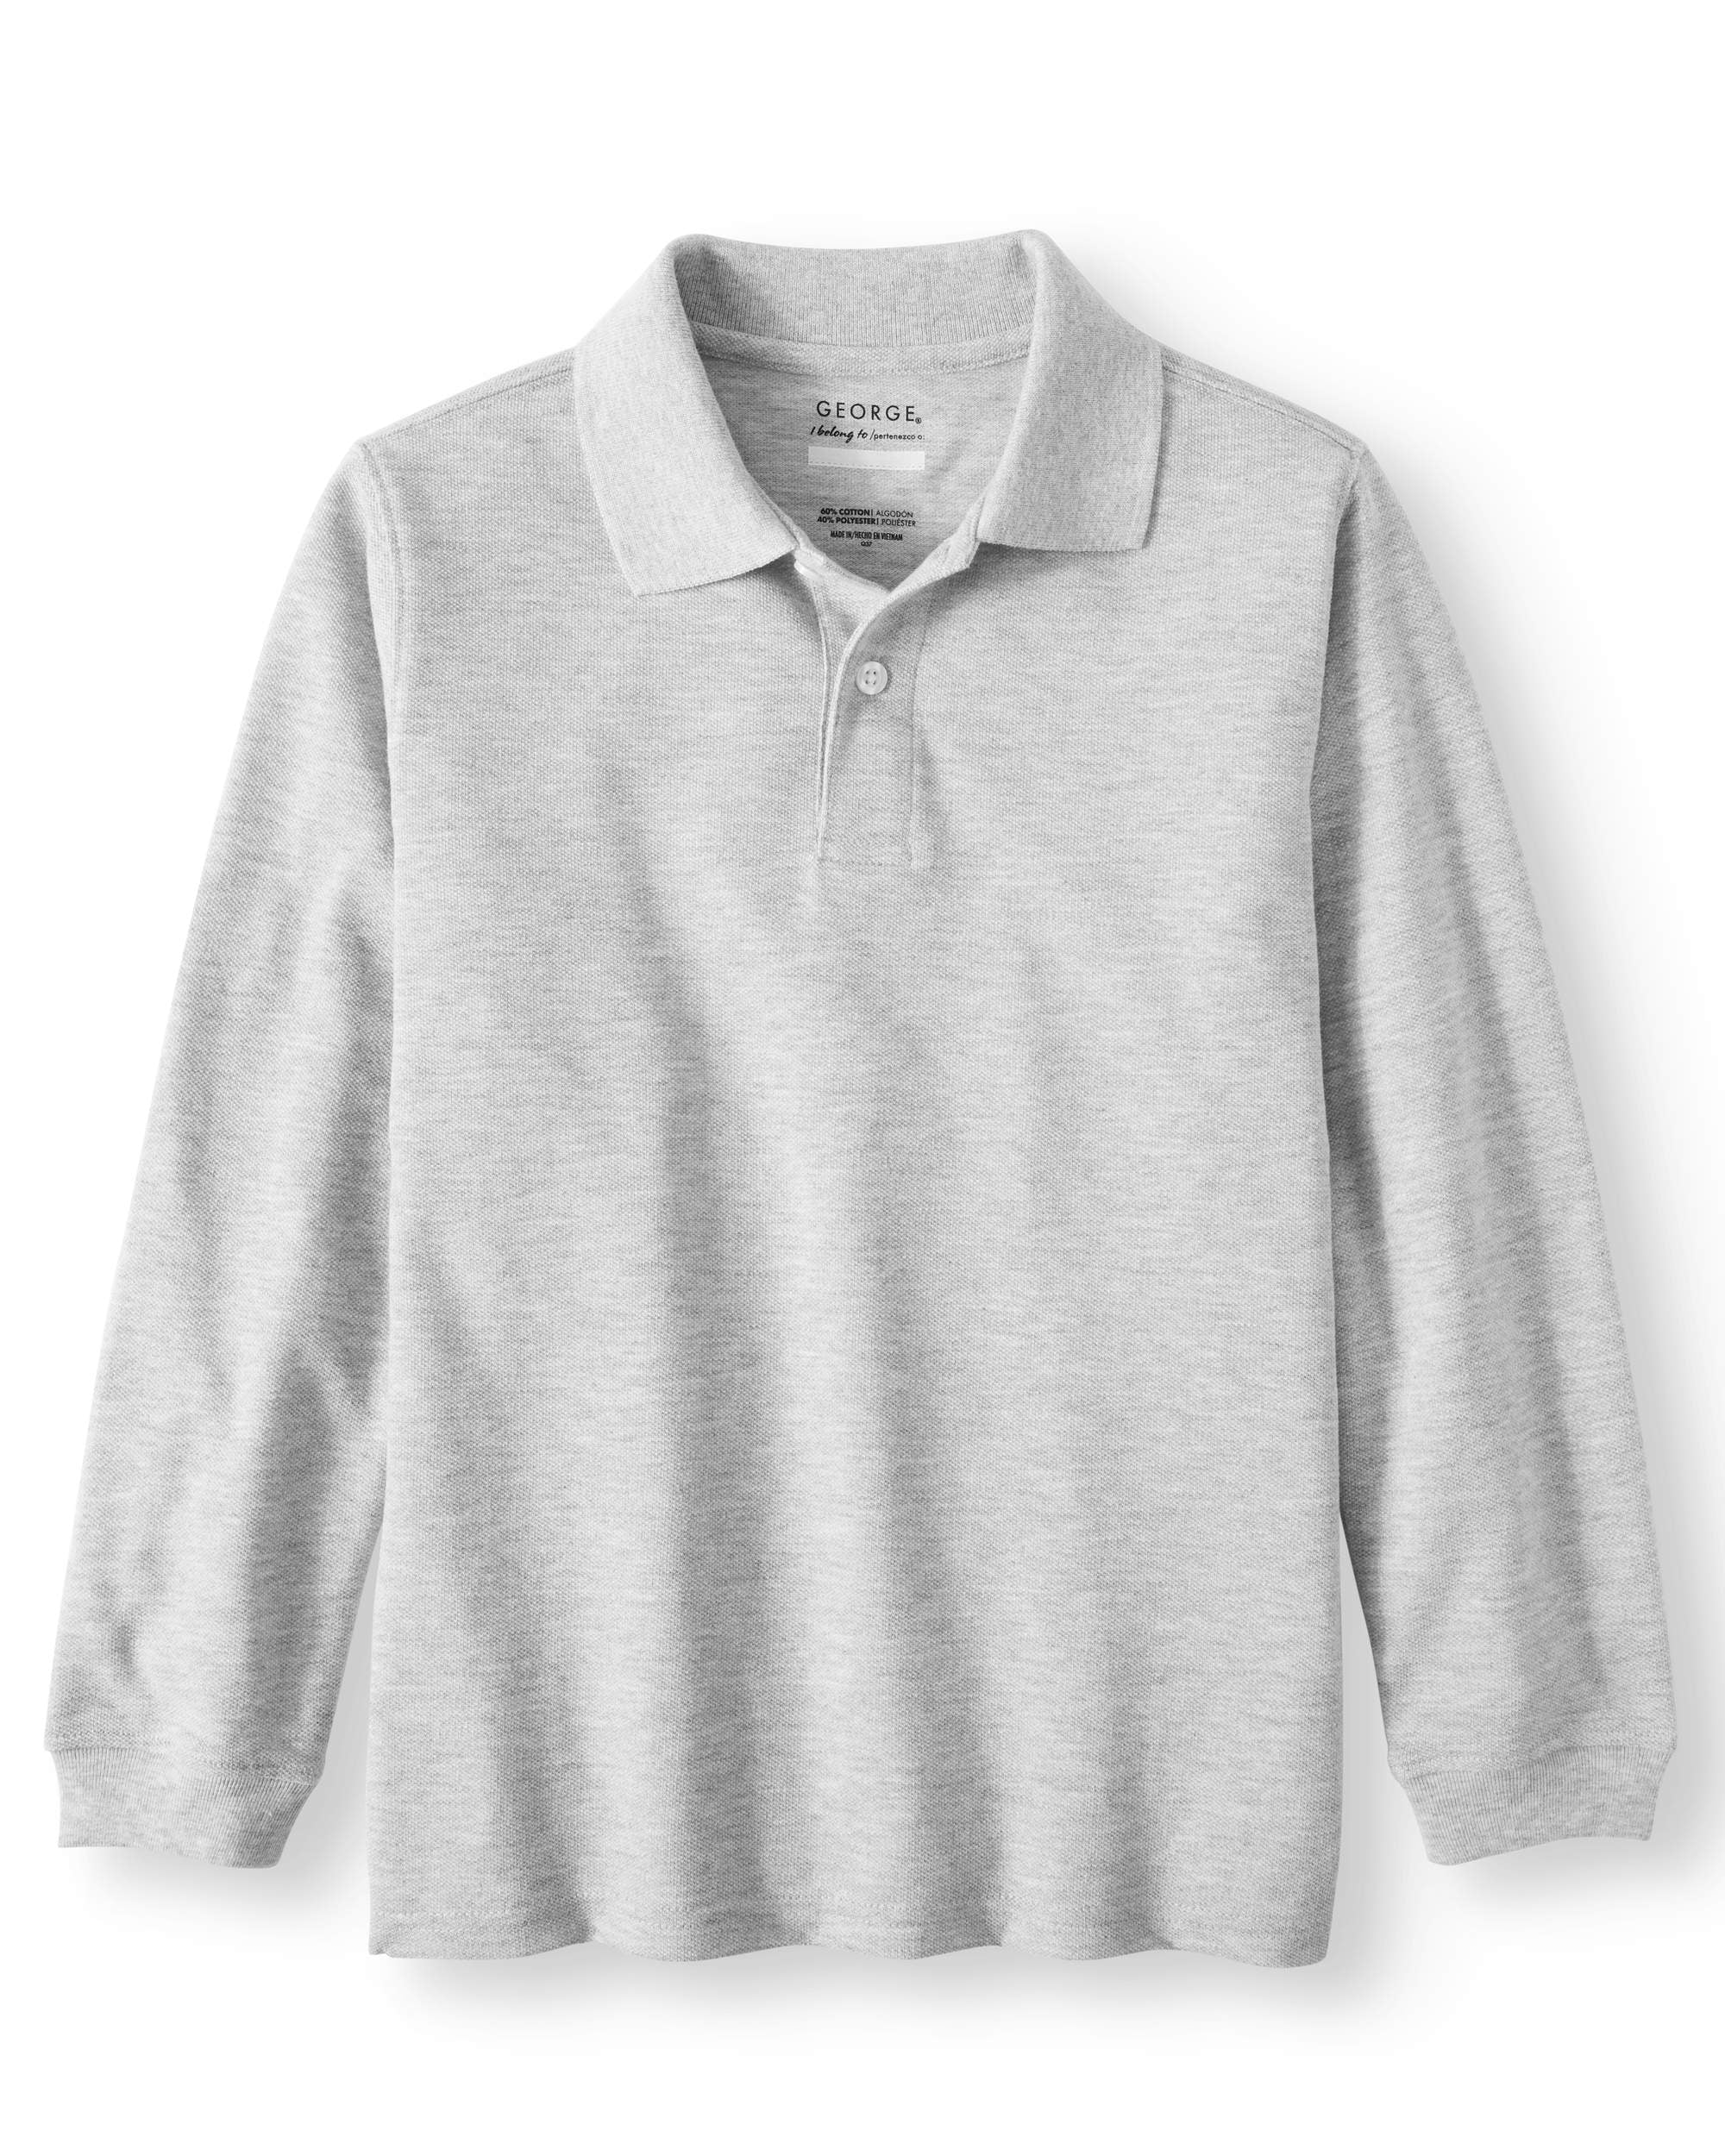 George Boys' School Uniforms, Long Sleev - Walmart.com